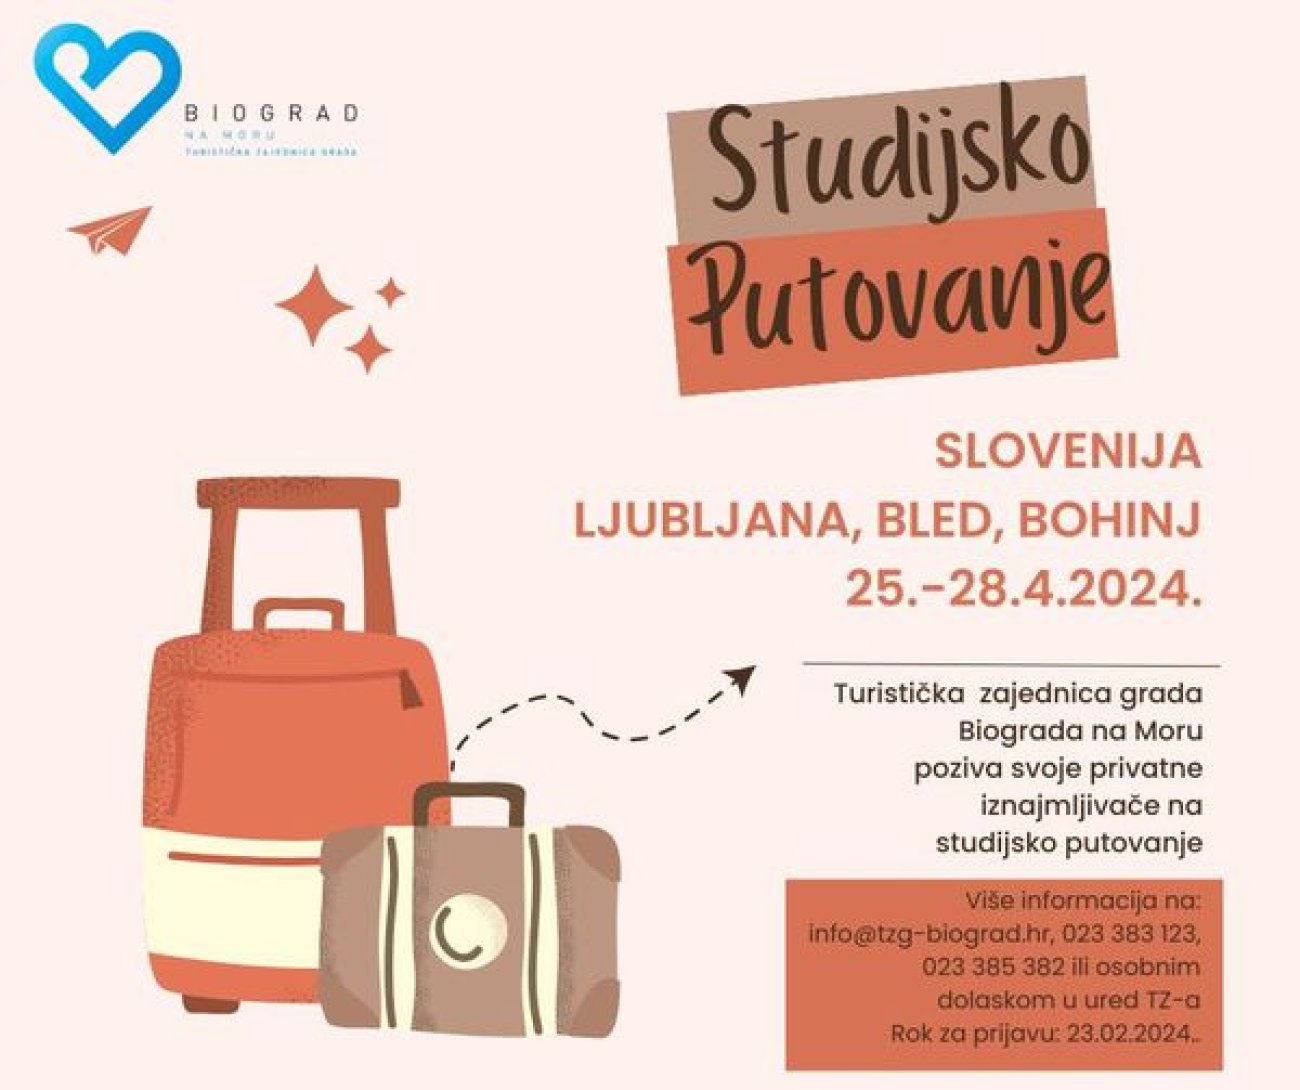 STUDIJSKO PUTOVANJE Slovenija: Ljubljana, Bled, Bohinj 25. - 28.4.2024.